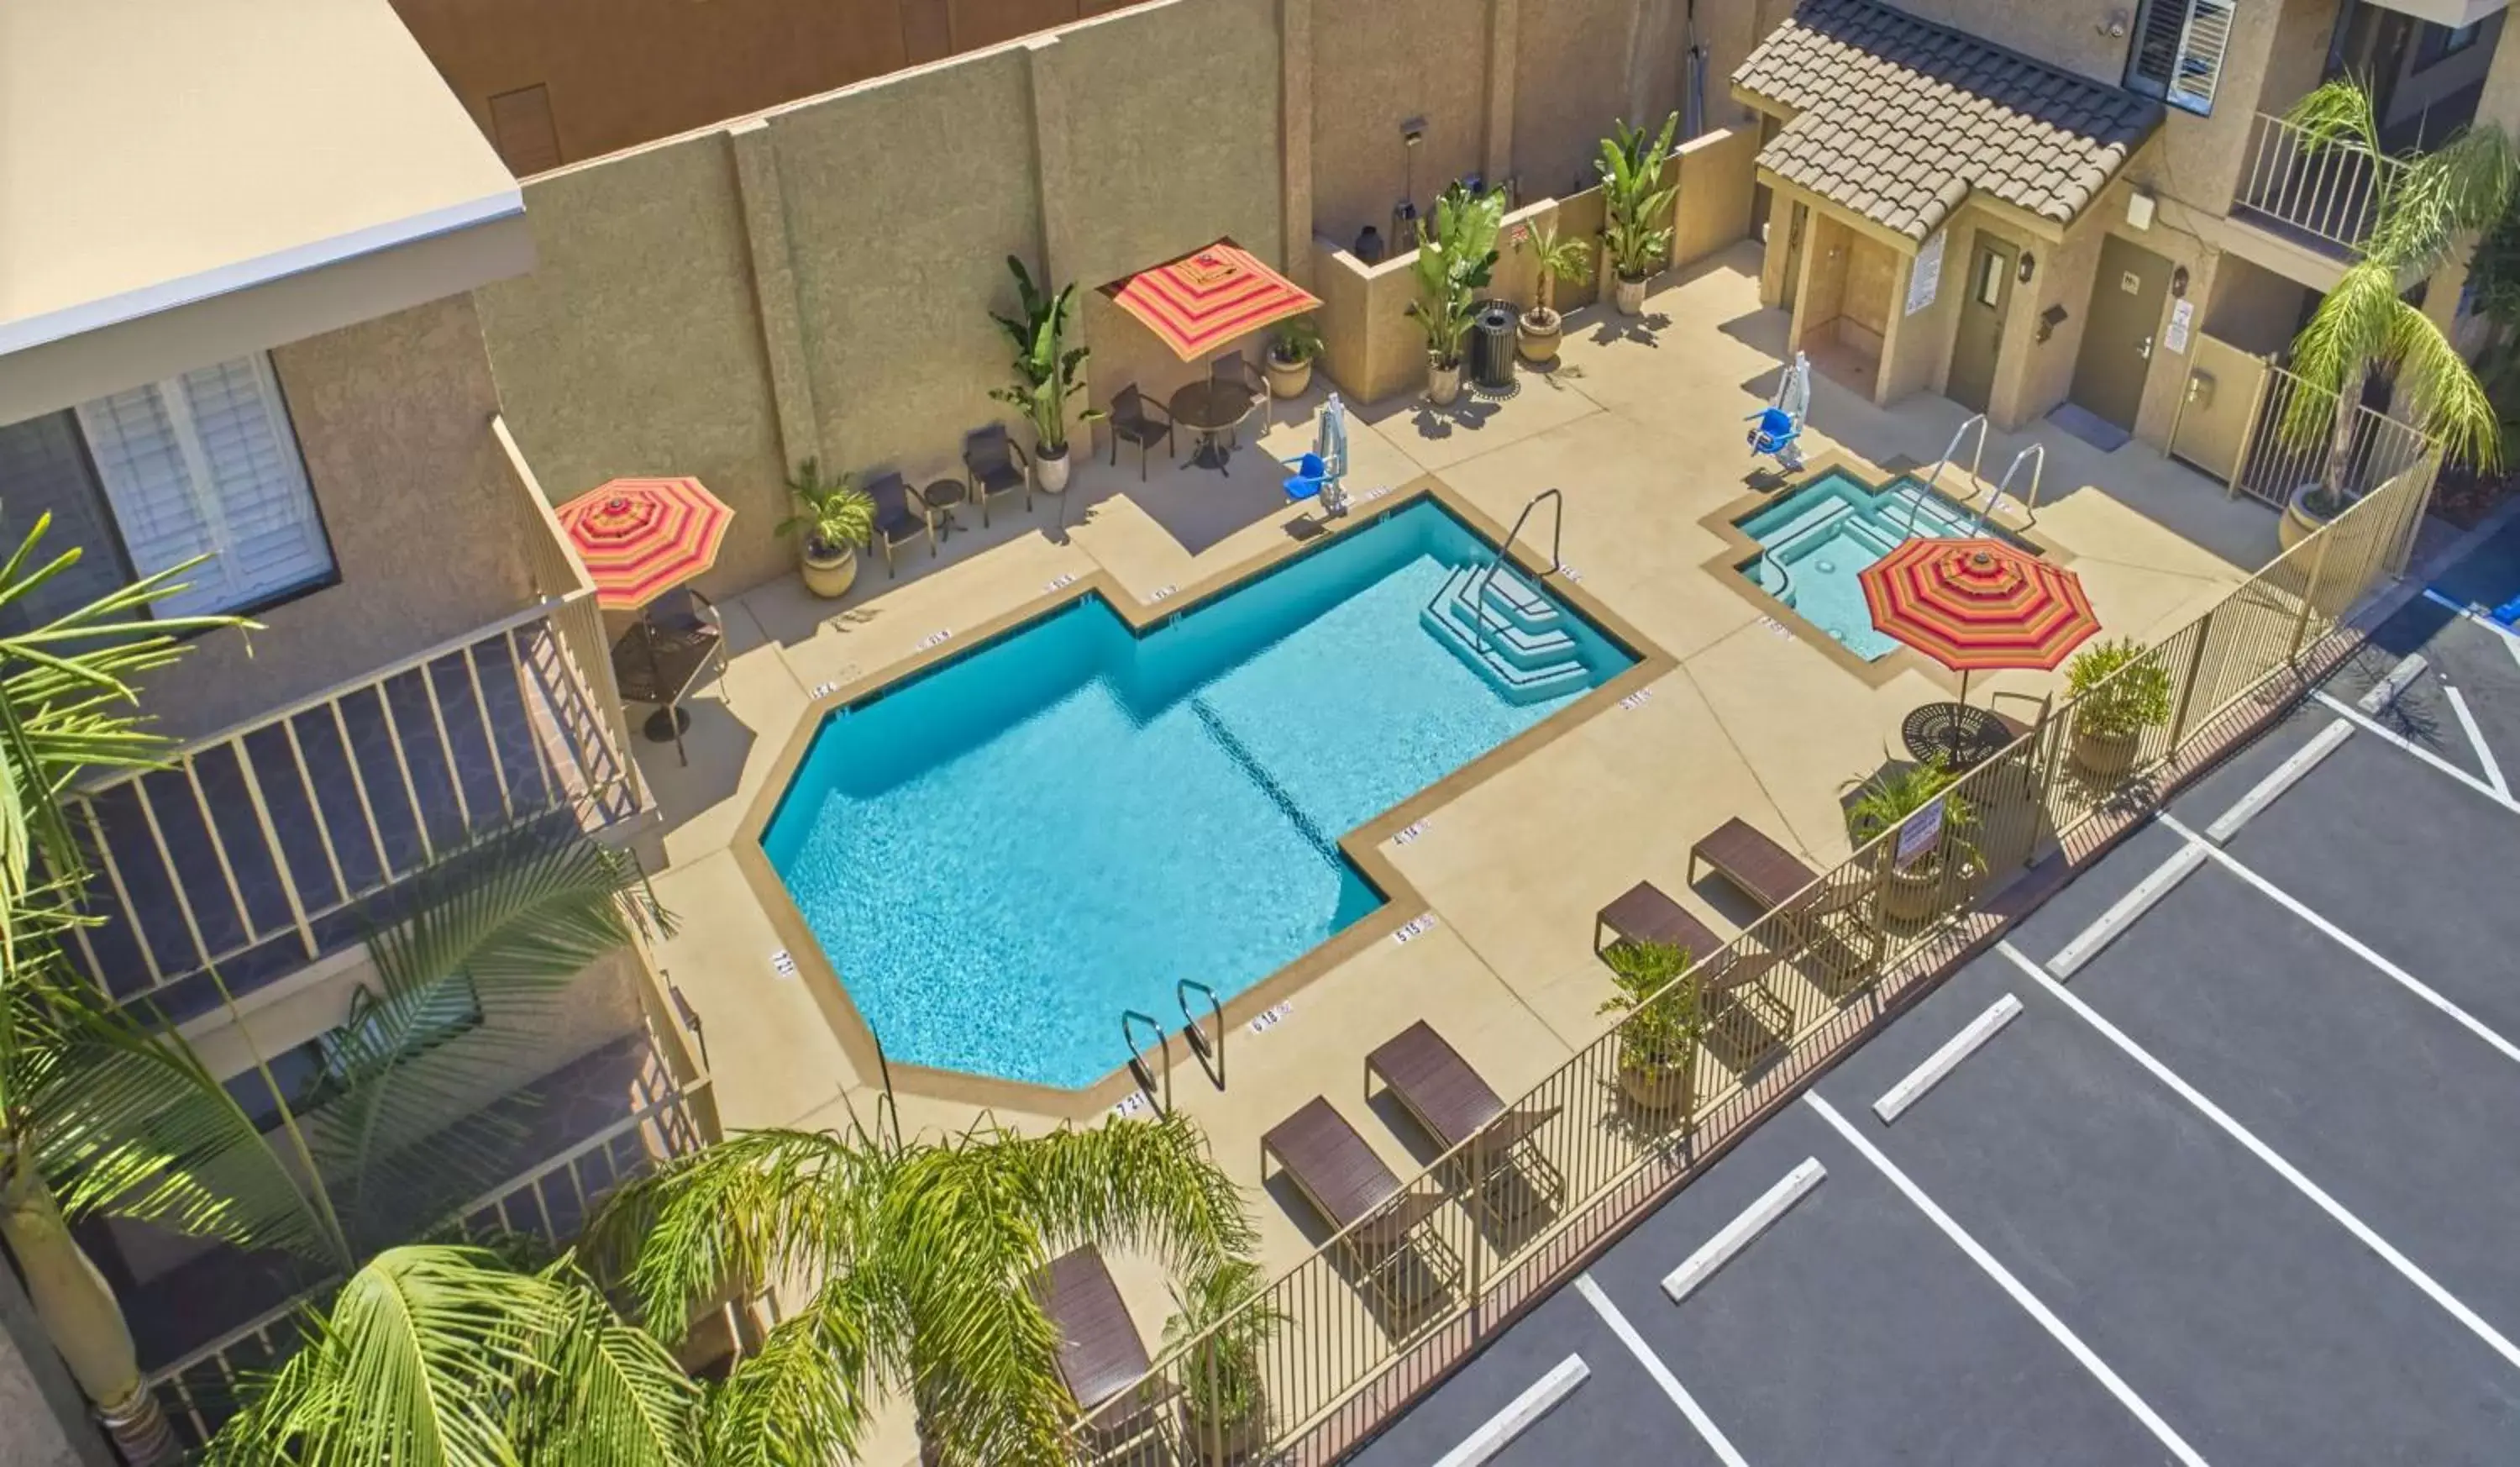 On site, Pool View in Best Western Plus Anaheim Inn